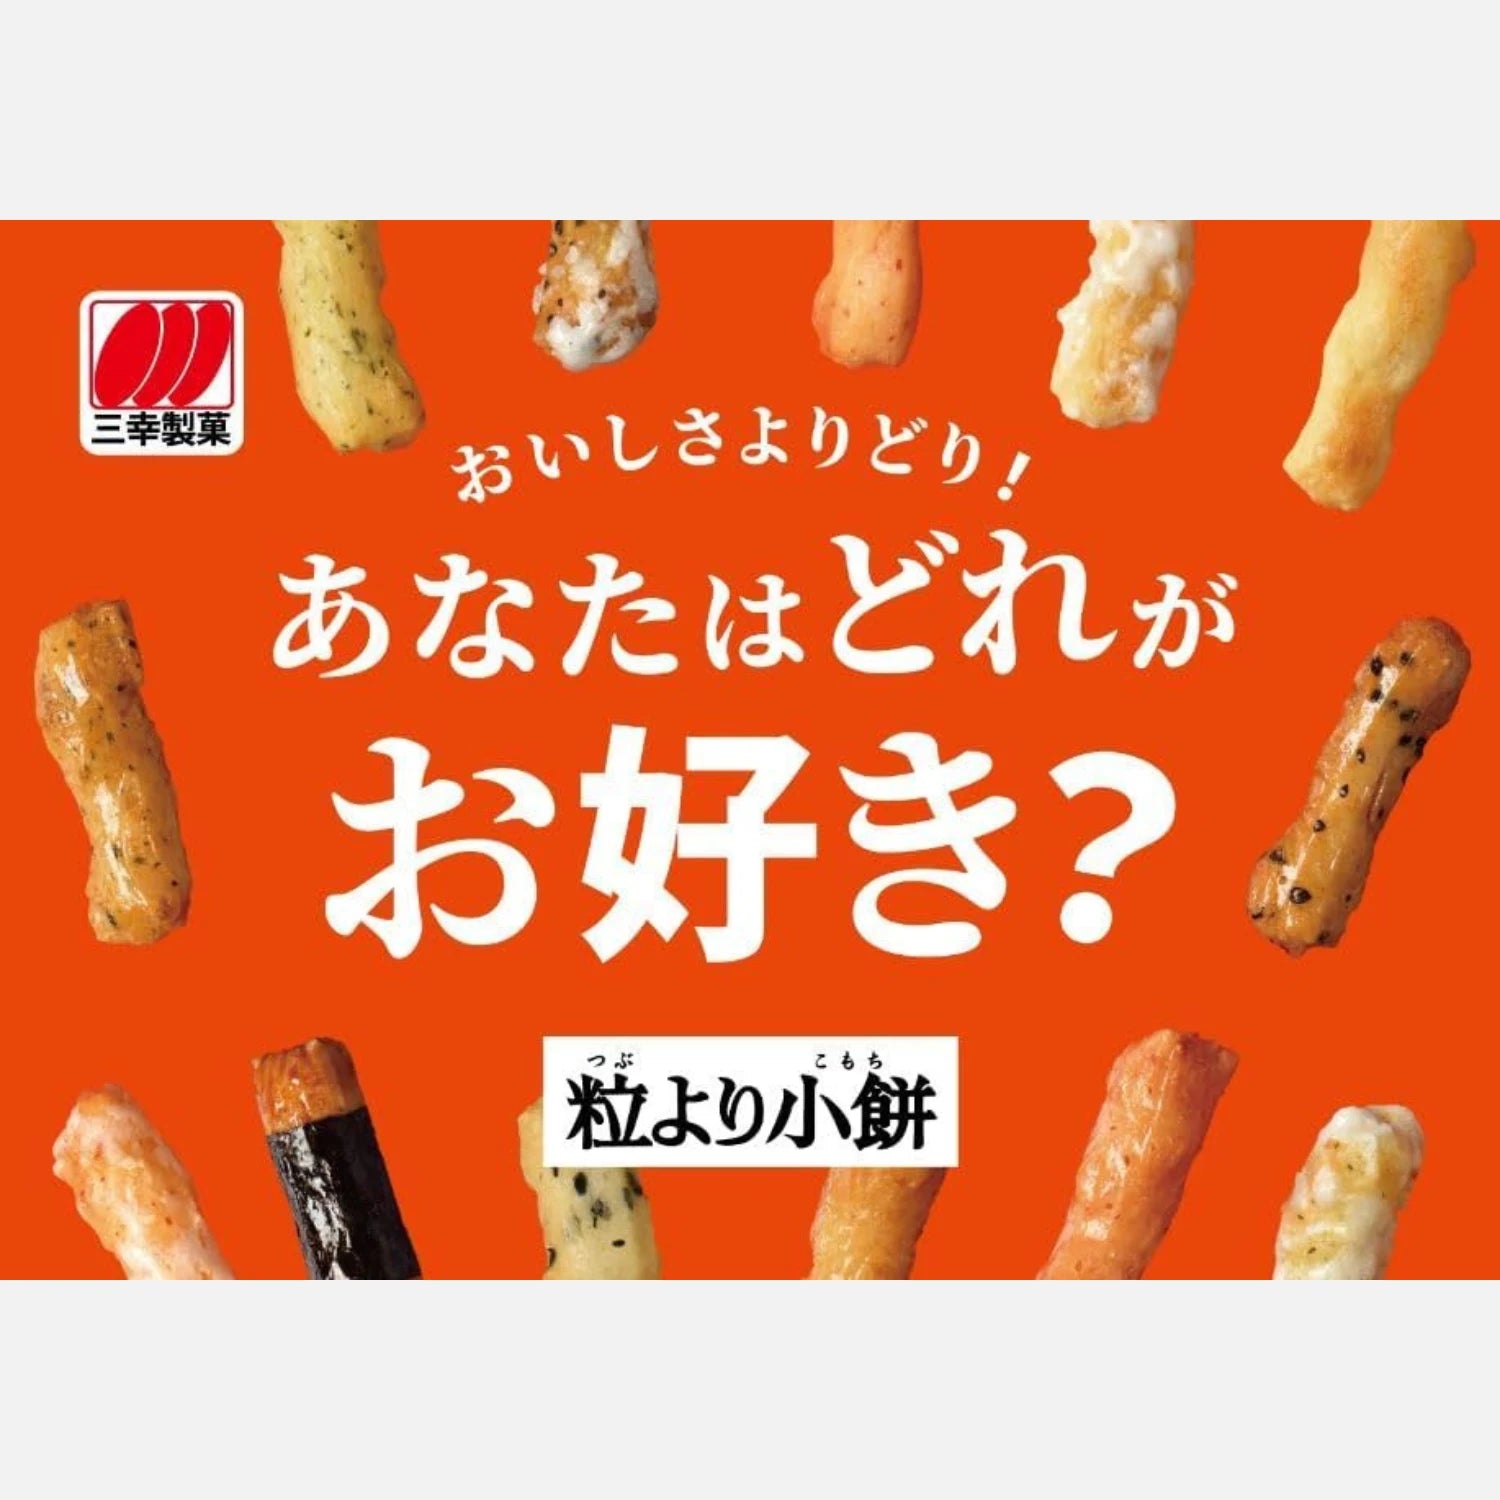 Sanko Seika "Tsubu Yori Komochi" Mixed Rice Crackers 80g (5 Packs Inside) - Buy Me Japan